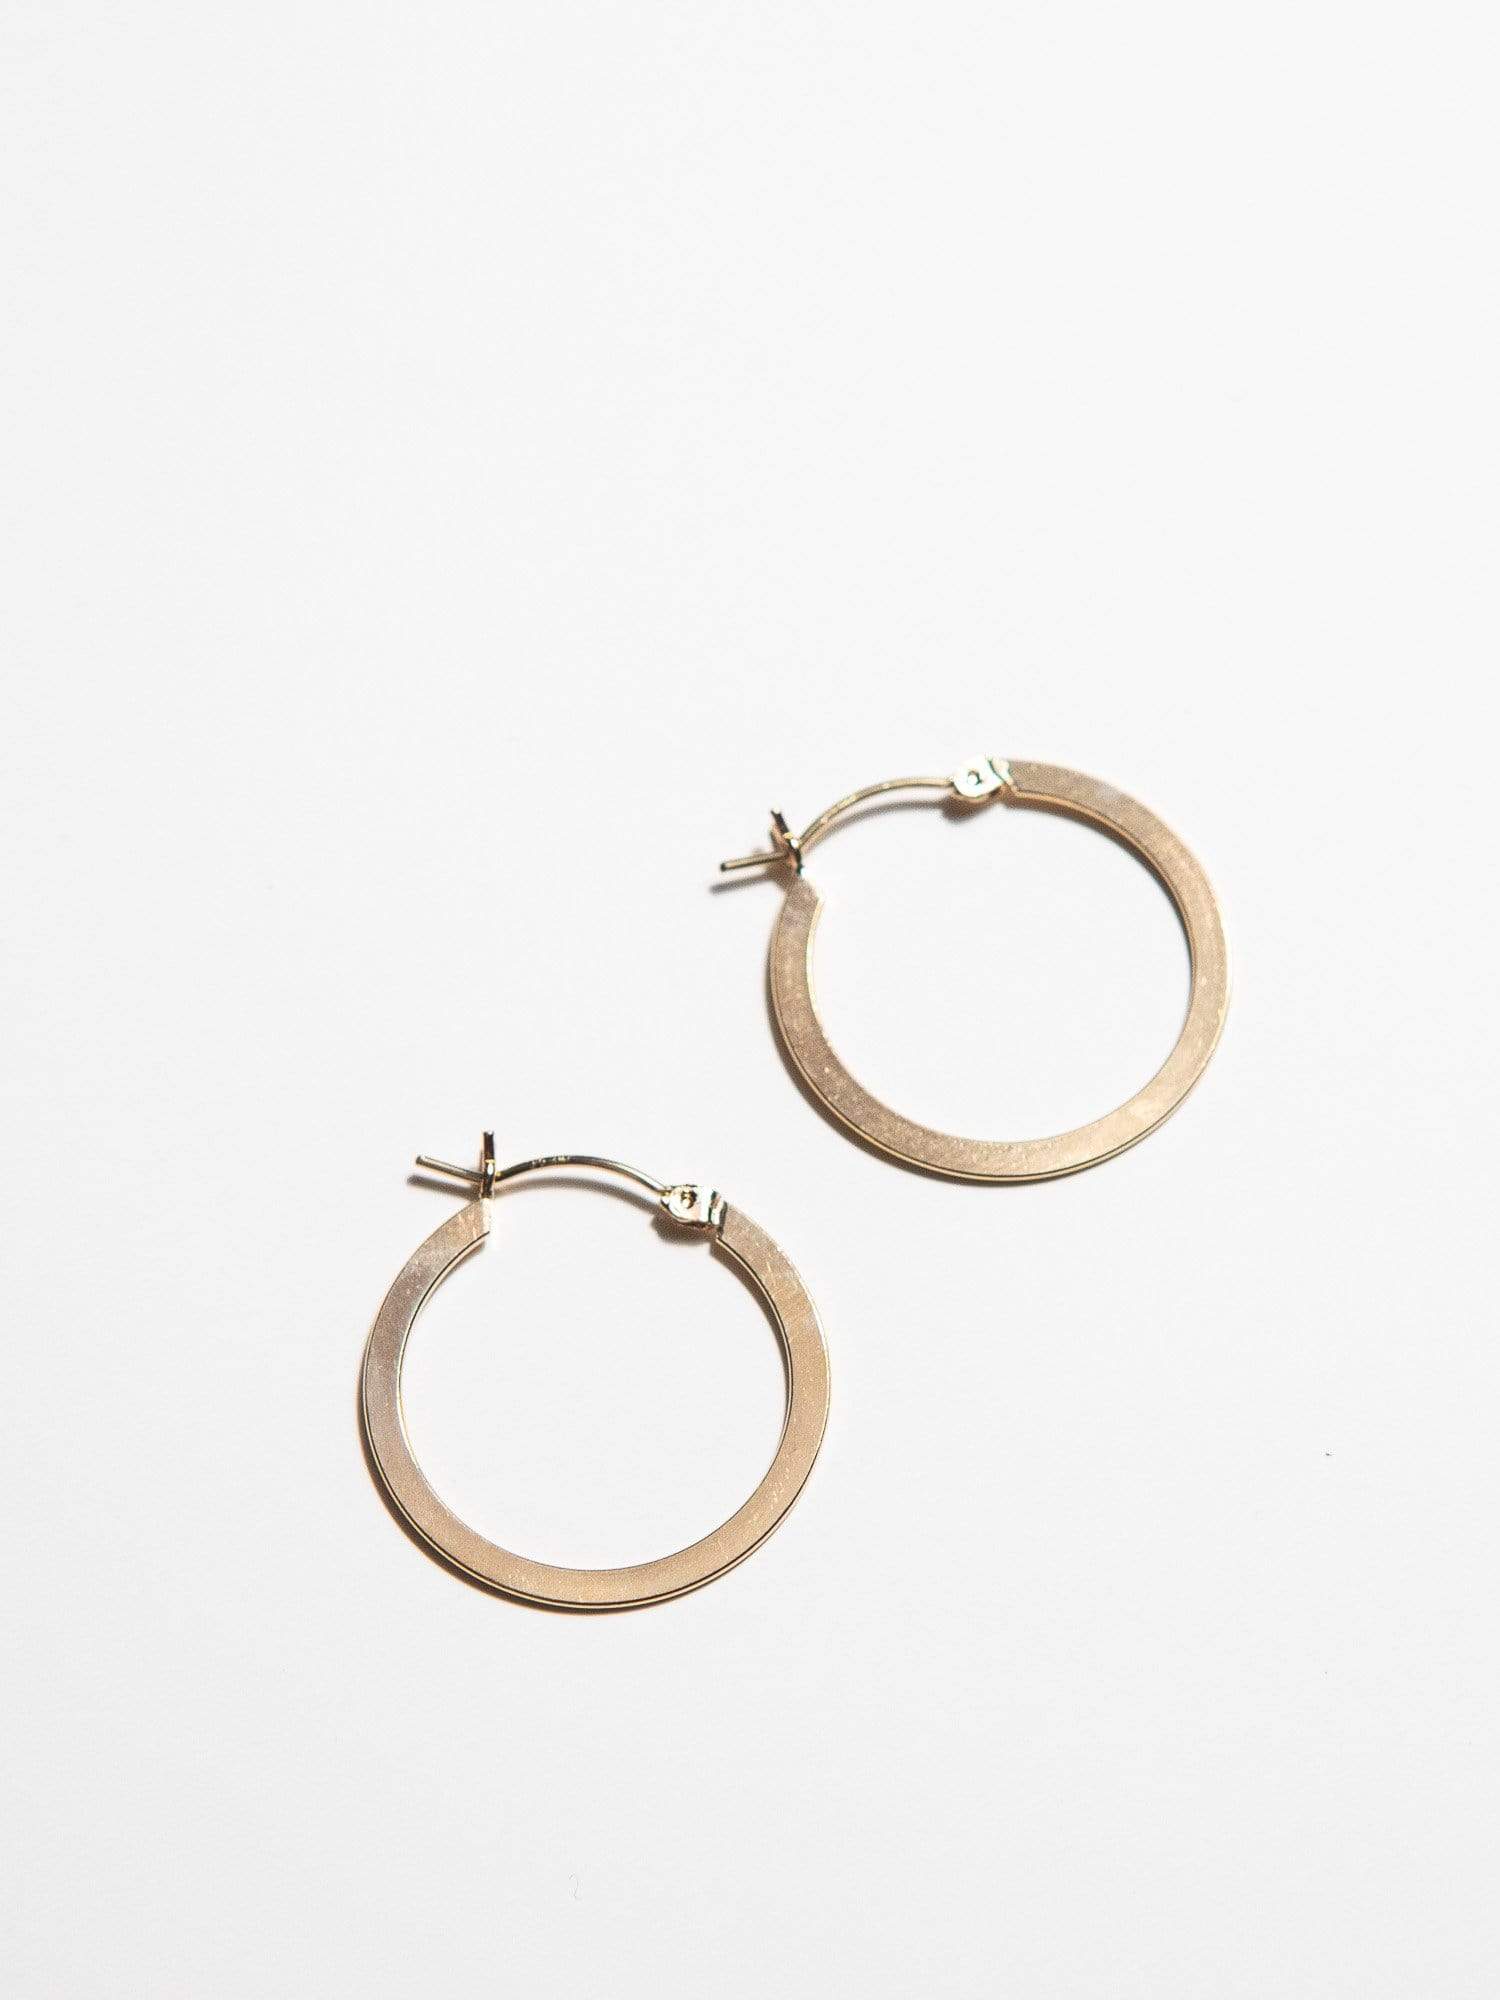 OXB Studio Earrings Gold Filled Flat Hoop